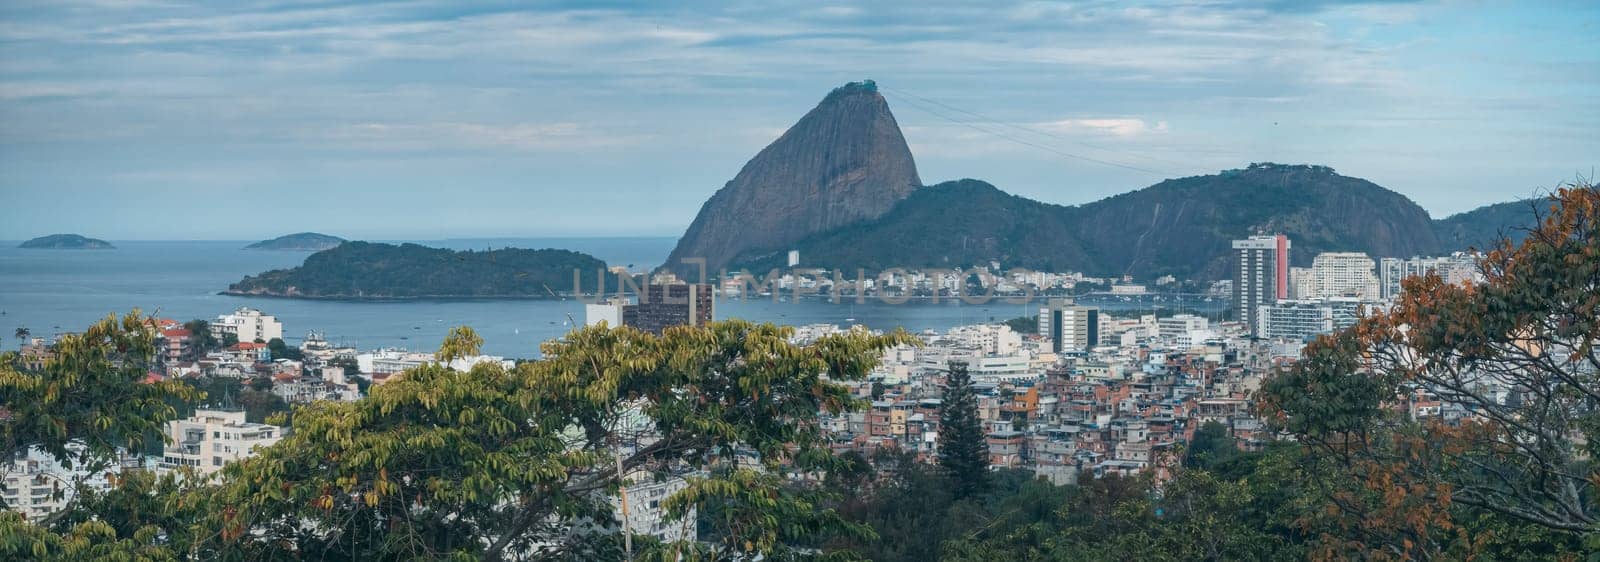 Iconic Panoramic View of Botafogo Bay in Dreamy Rio de Janeiro by FerradalFCG